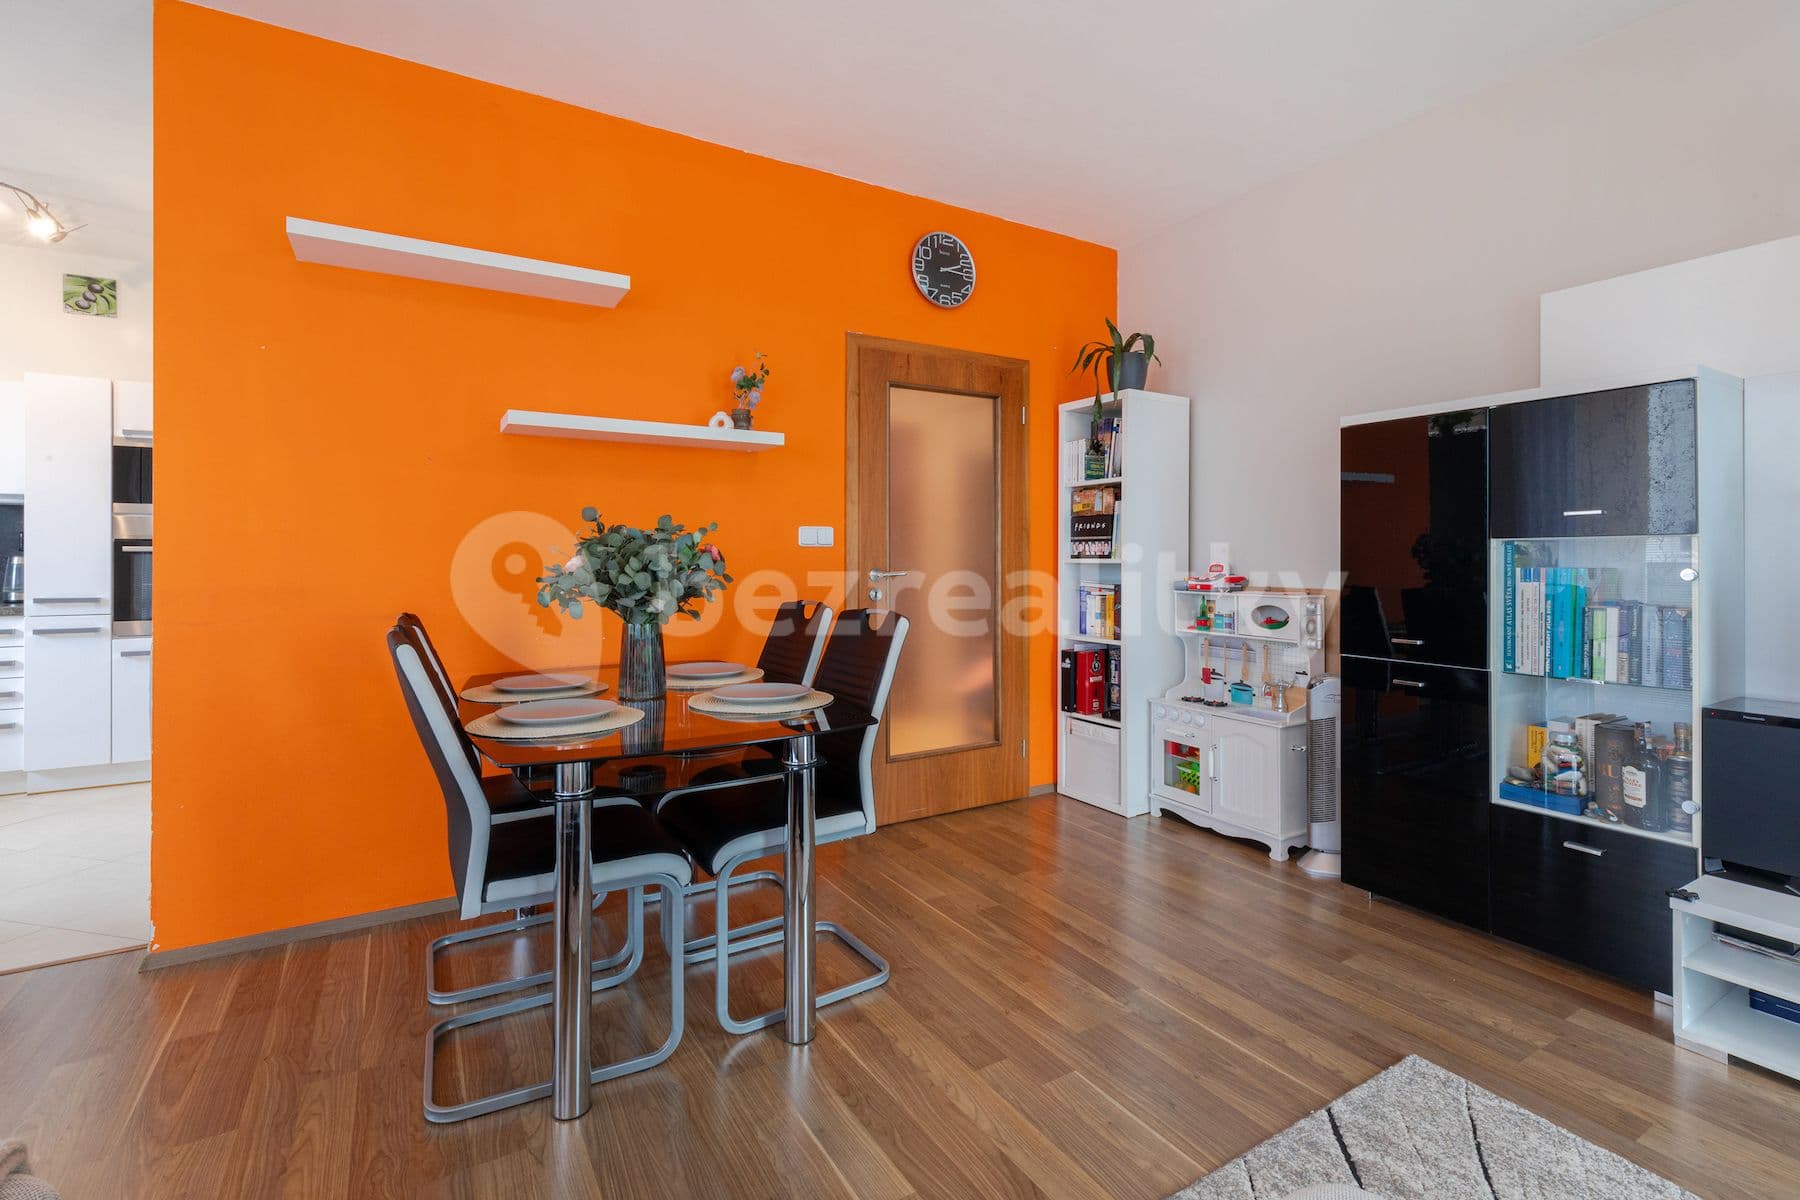 2 bedroom with open-plan kitchen flat for sale, 84 m², Miroslava Hajna, Prague, Prague